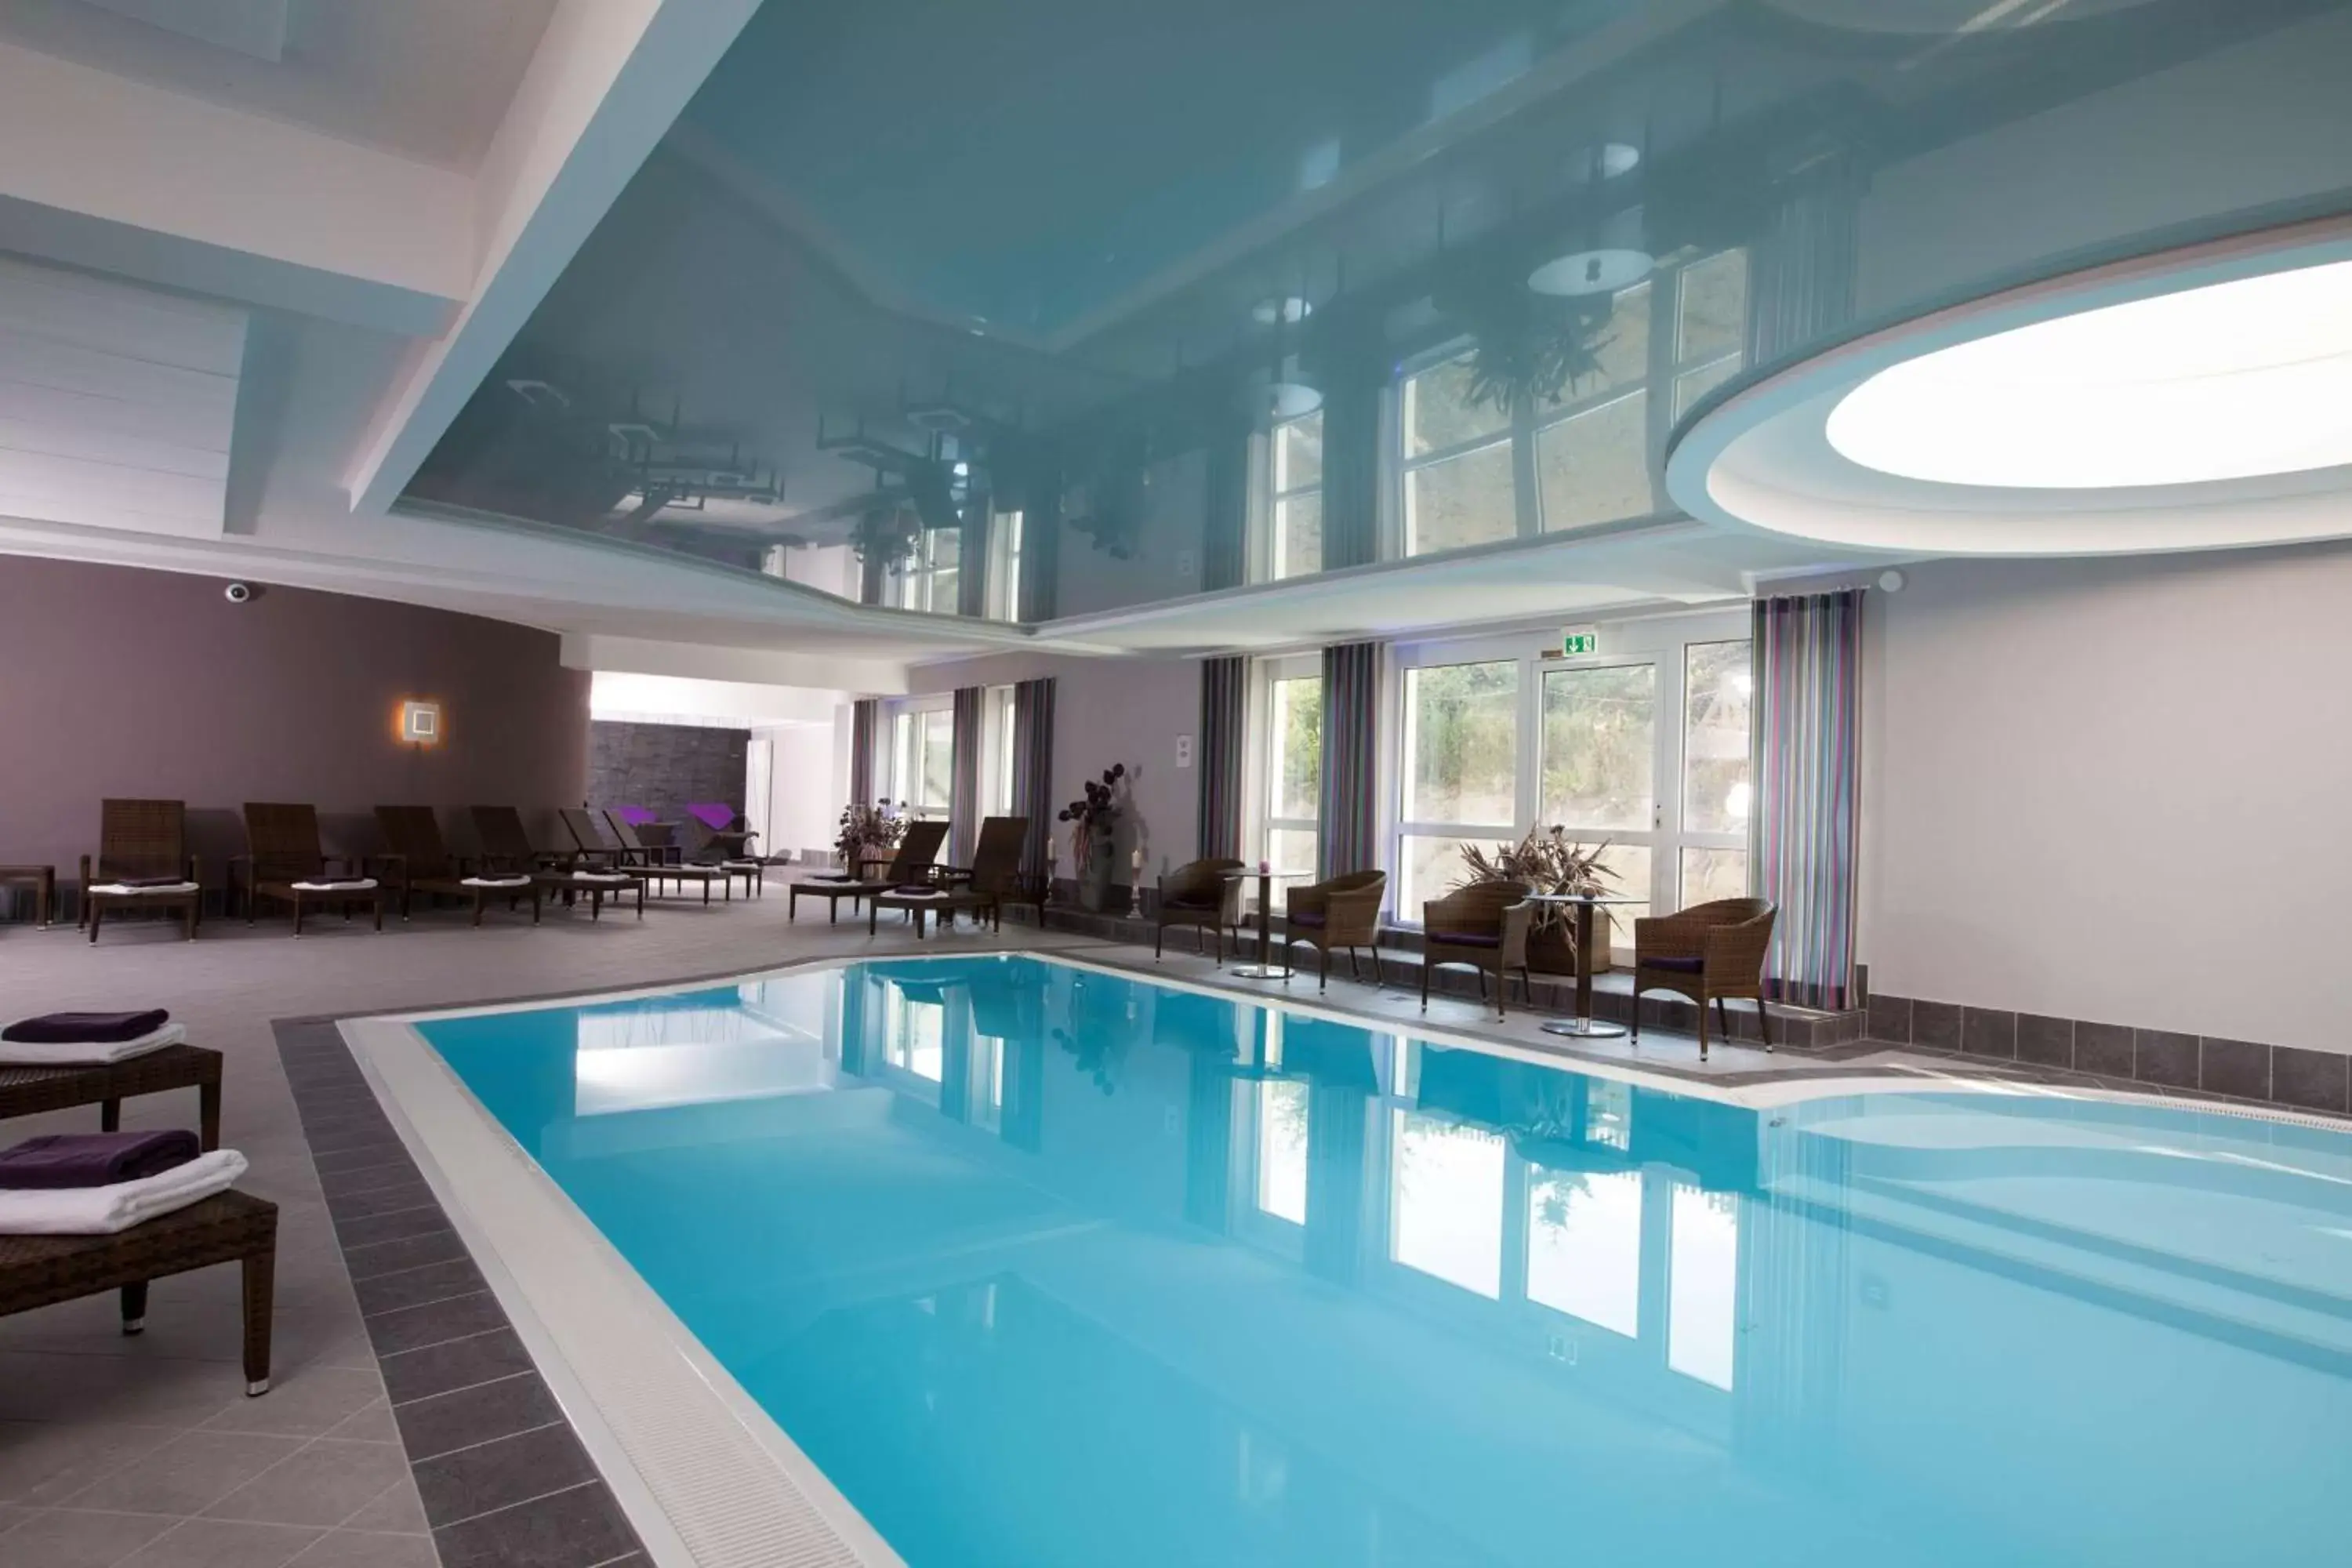 On site, Swimming Pool in Best Western Plus Hotel Willingen